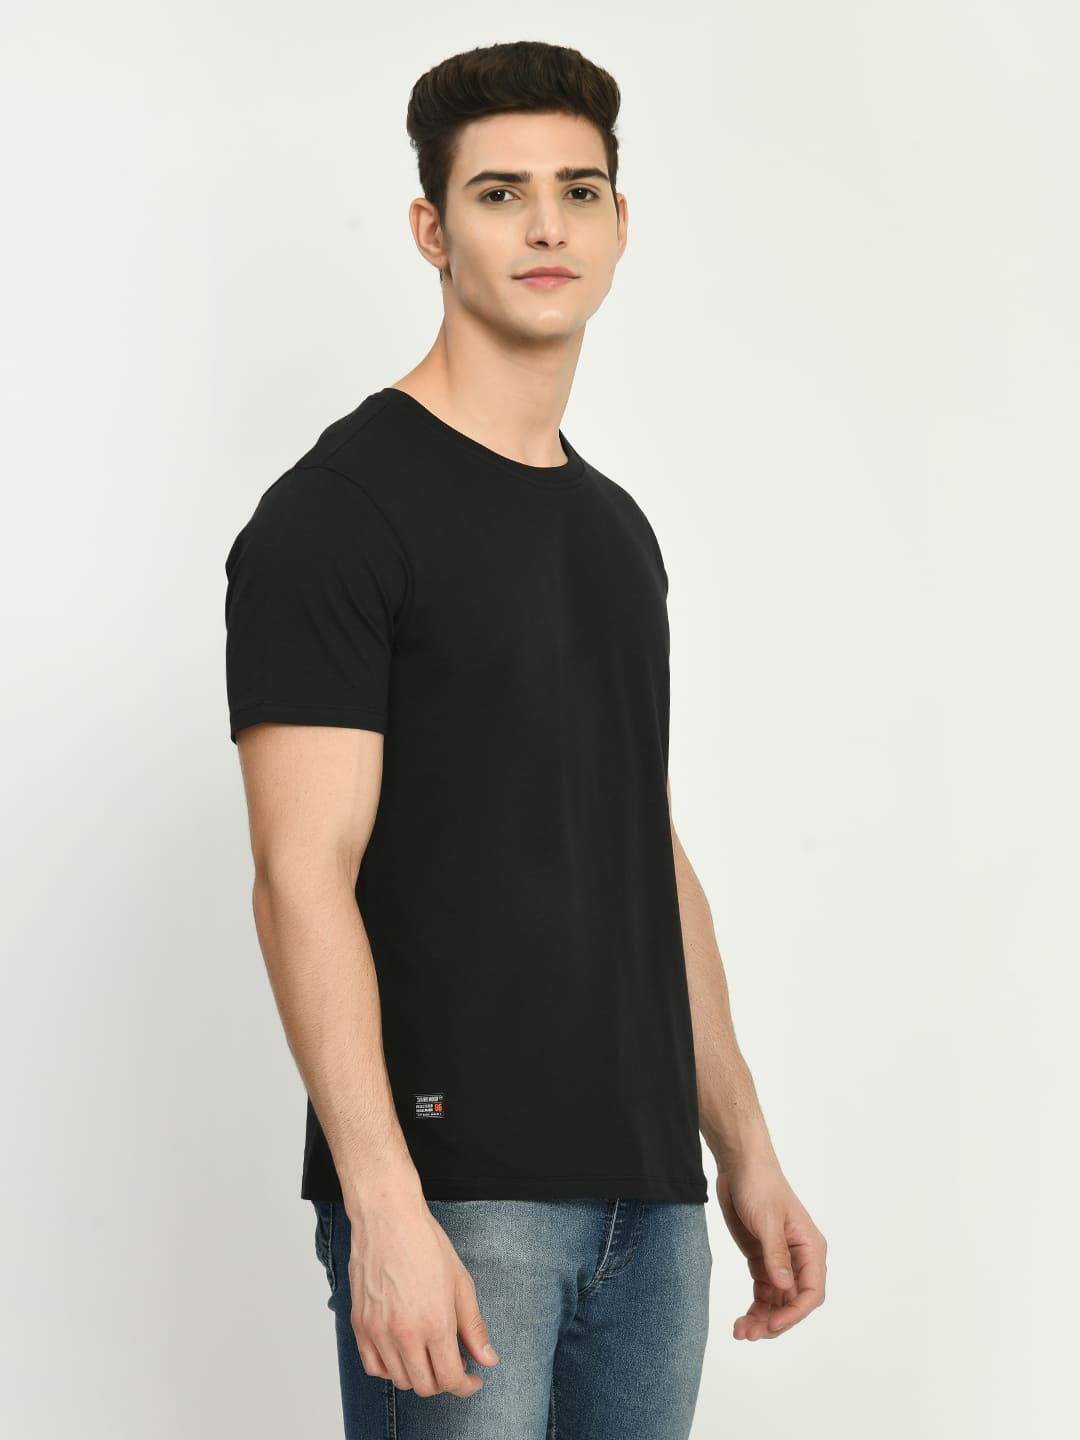 Men's Black Solid Crew Neck T-Shirt